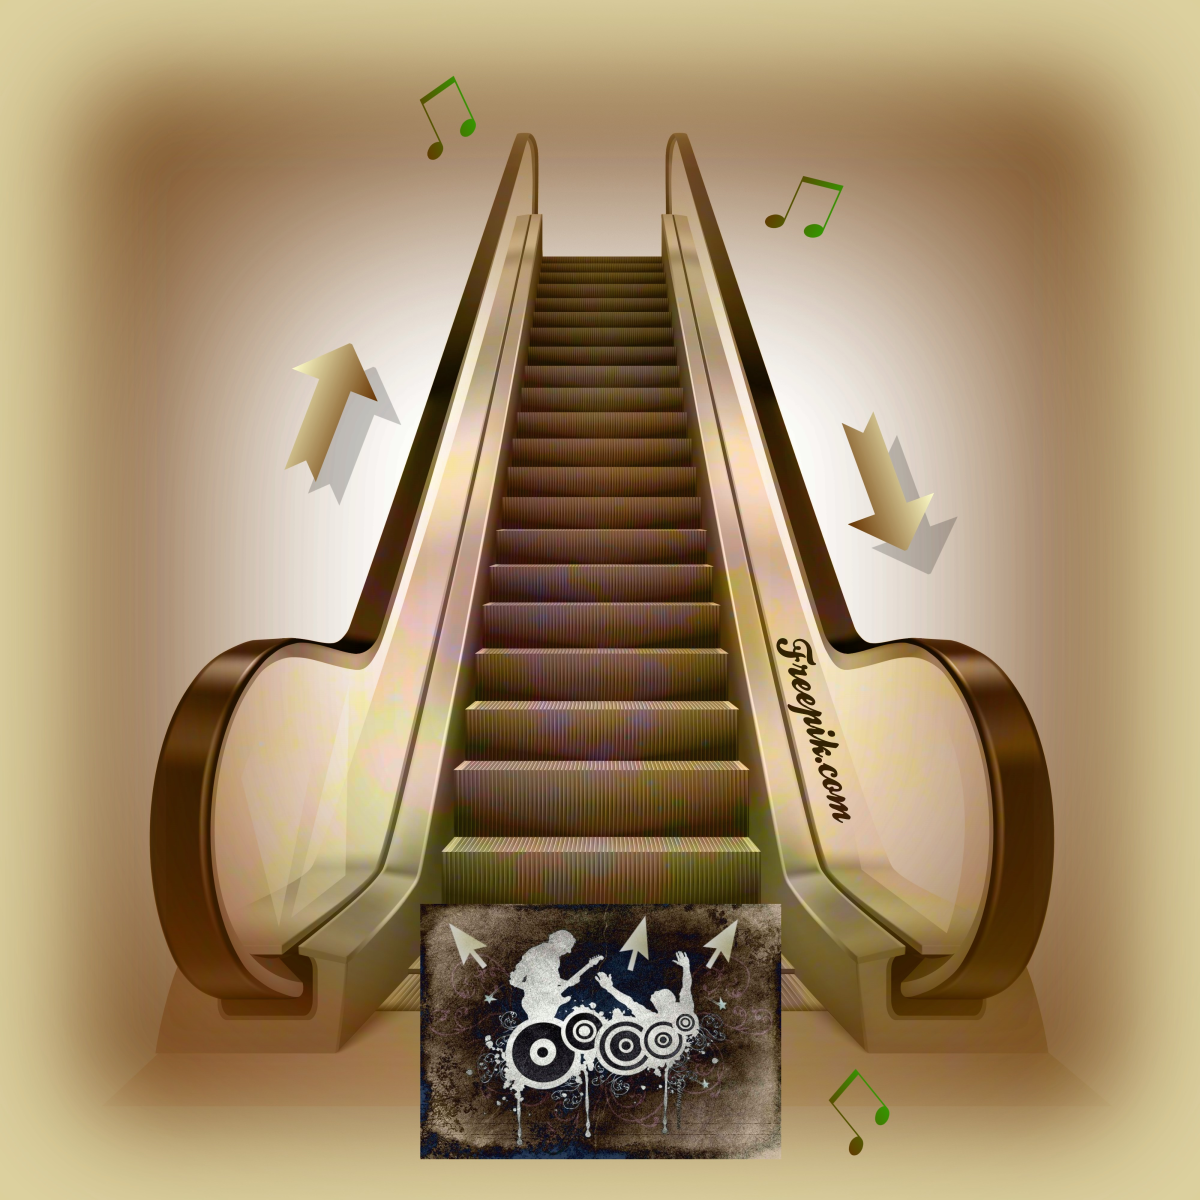 Rockin’ & Rollin’ Up the Down Escalator